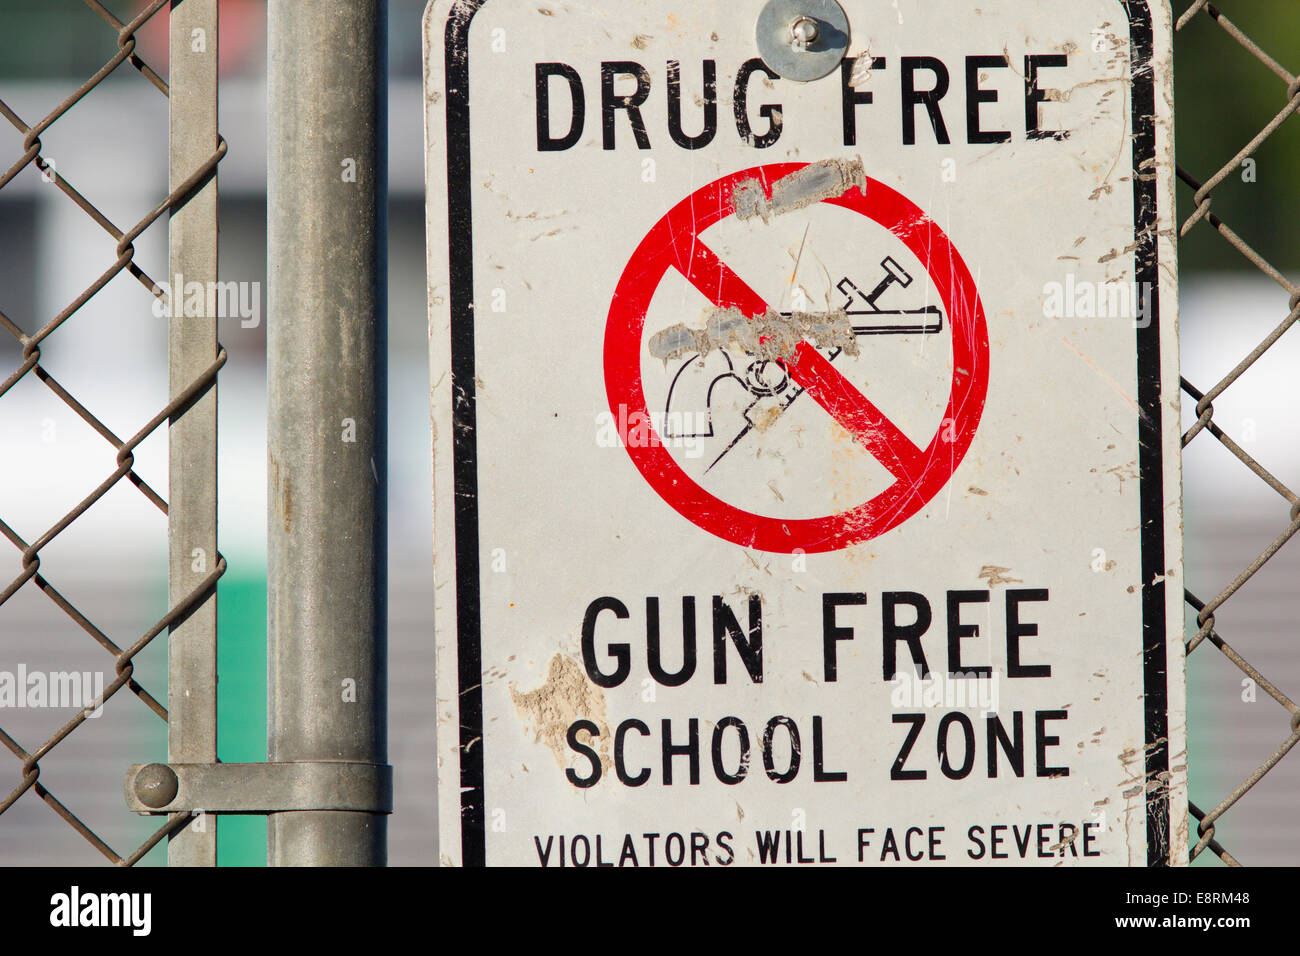 Drug free gun free sign Stock Photo